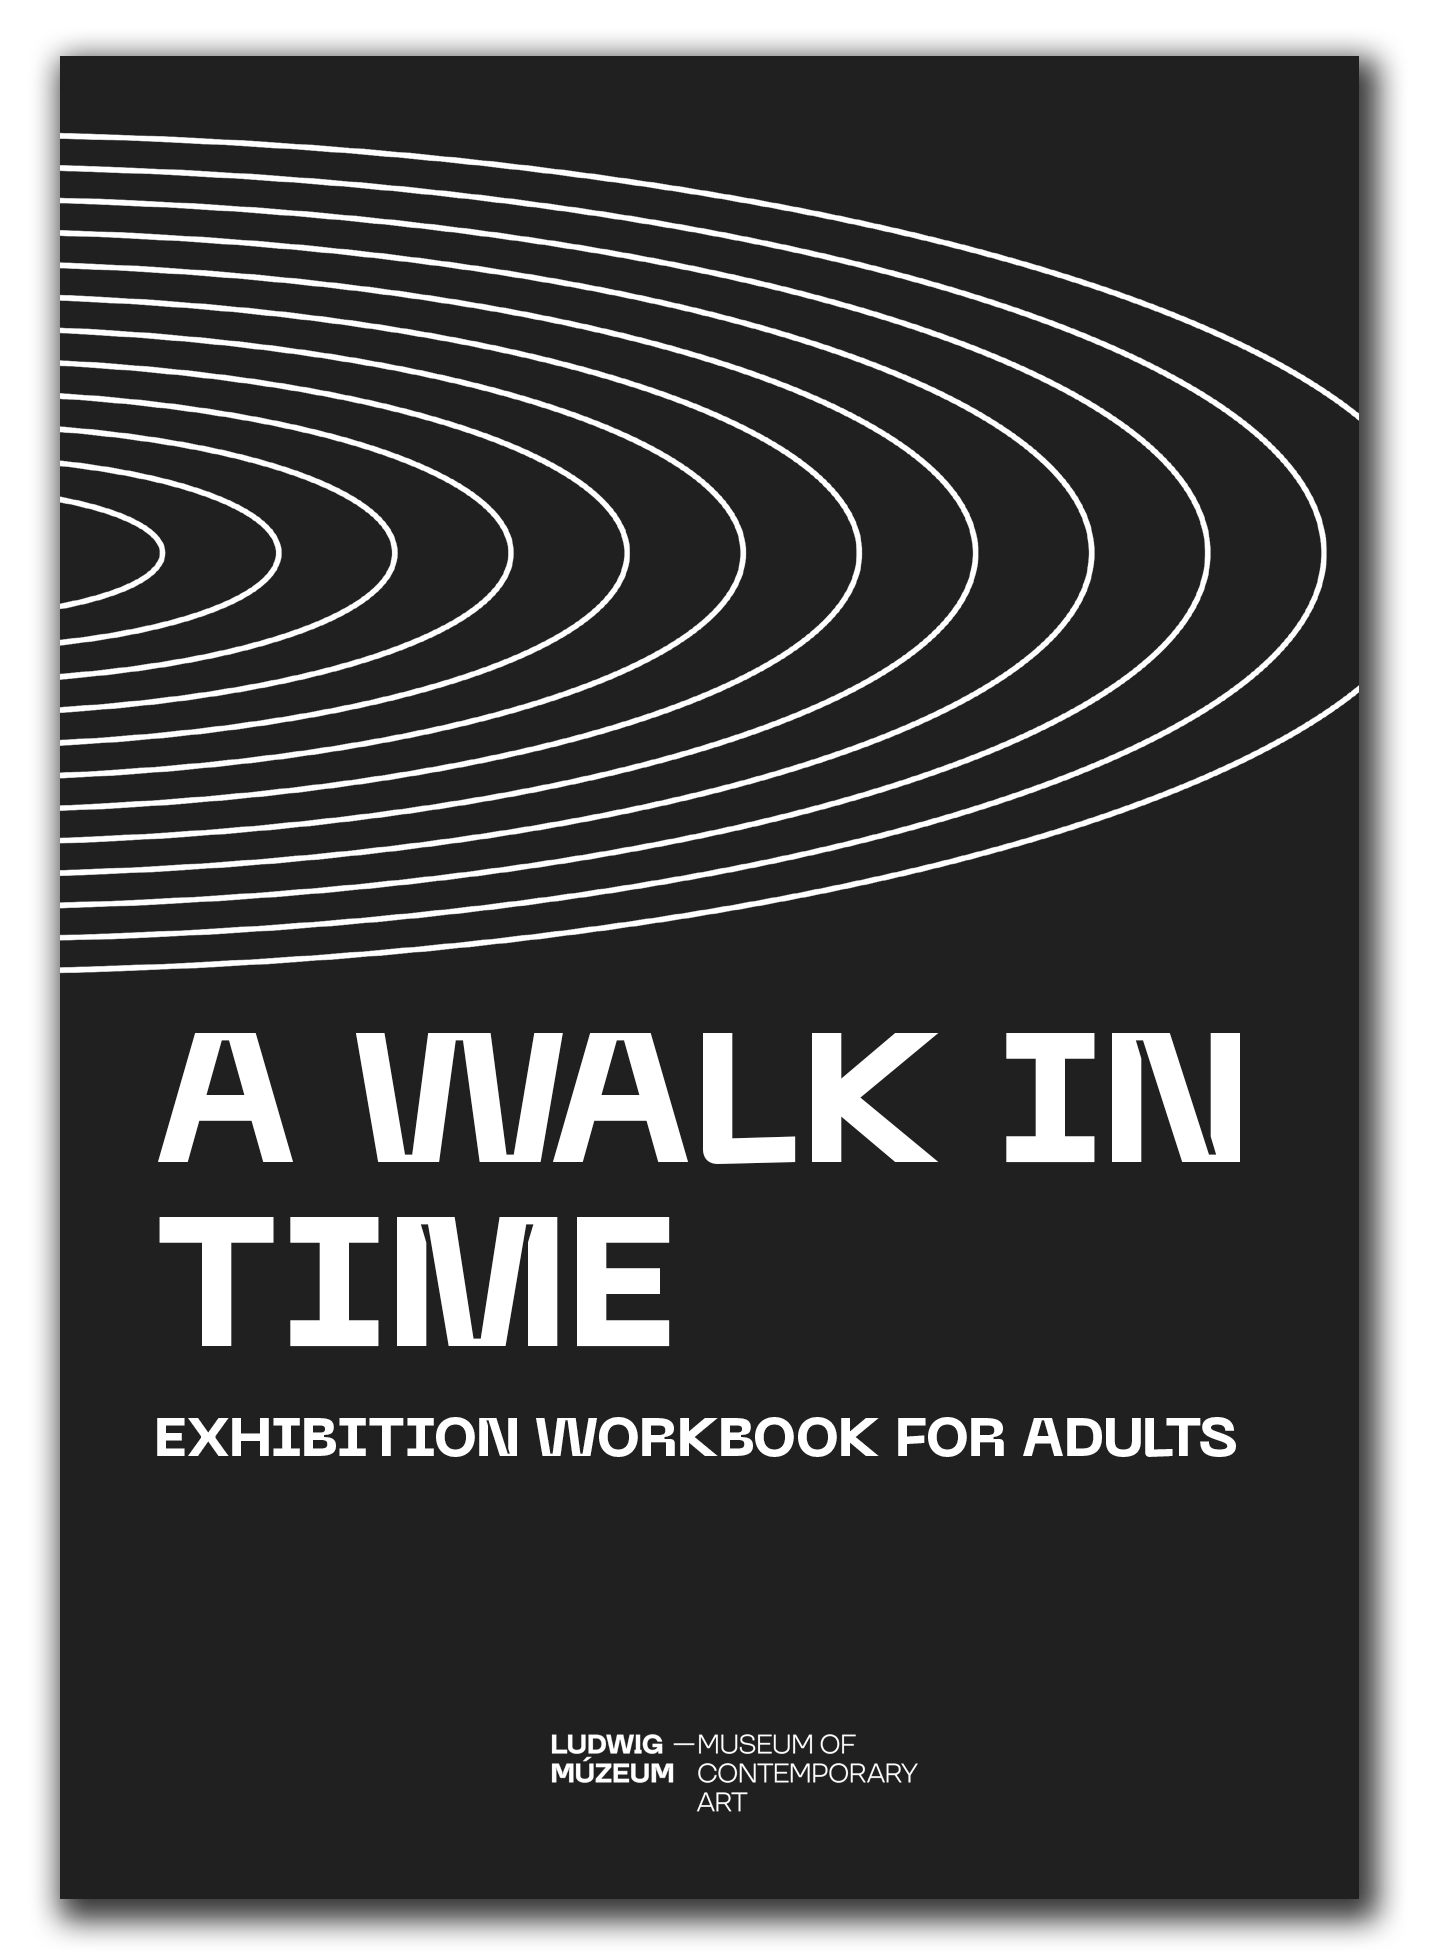 A walk in time - exhibition workbook